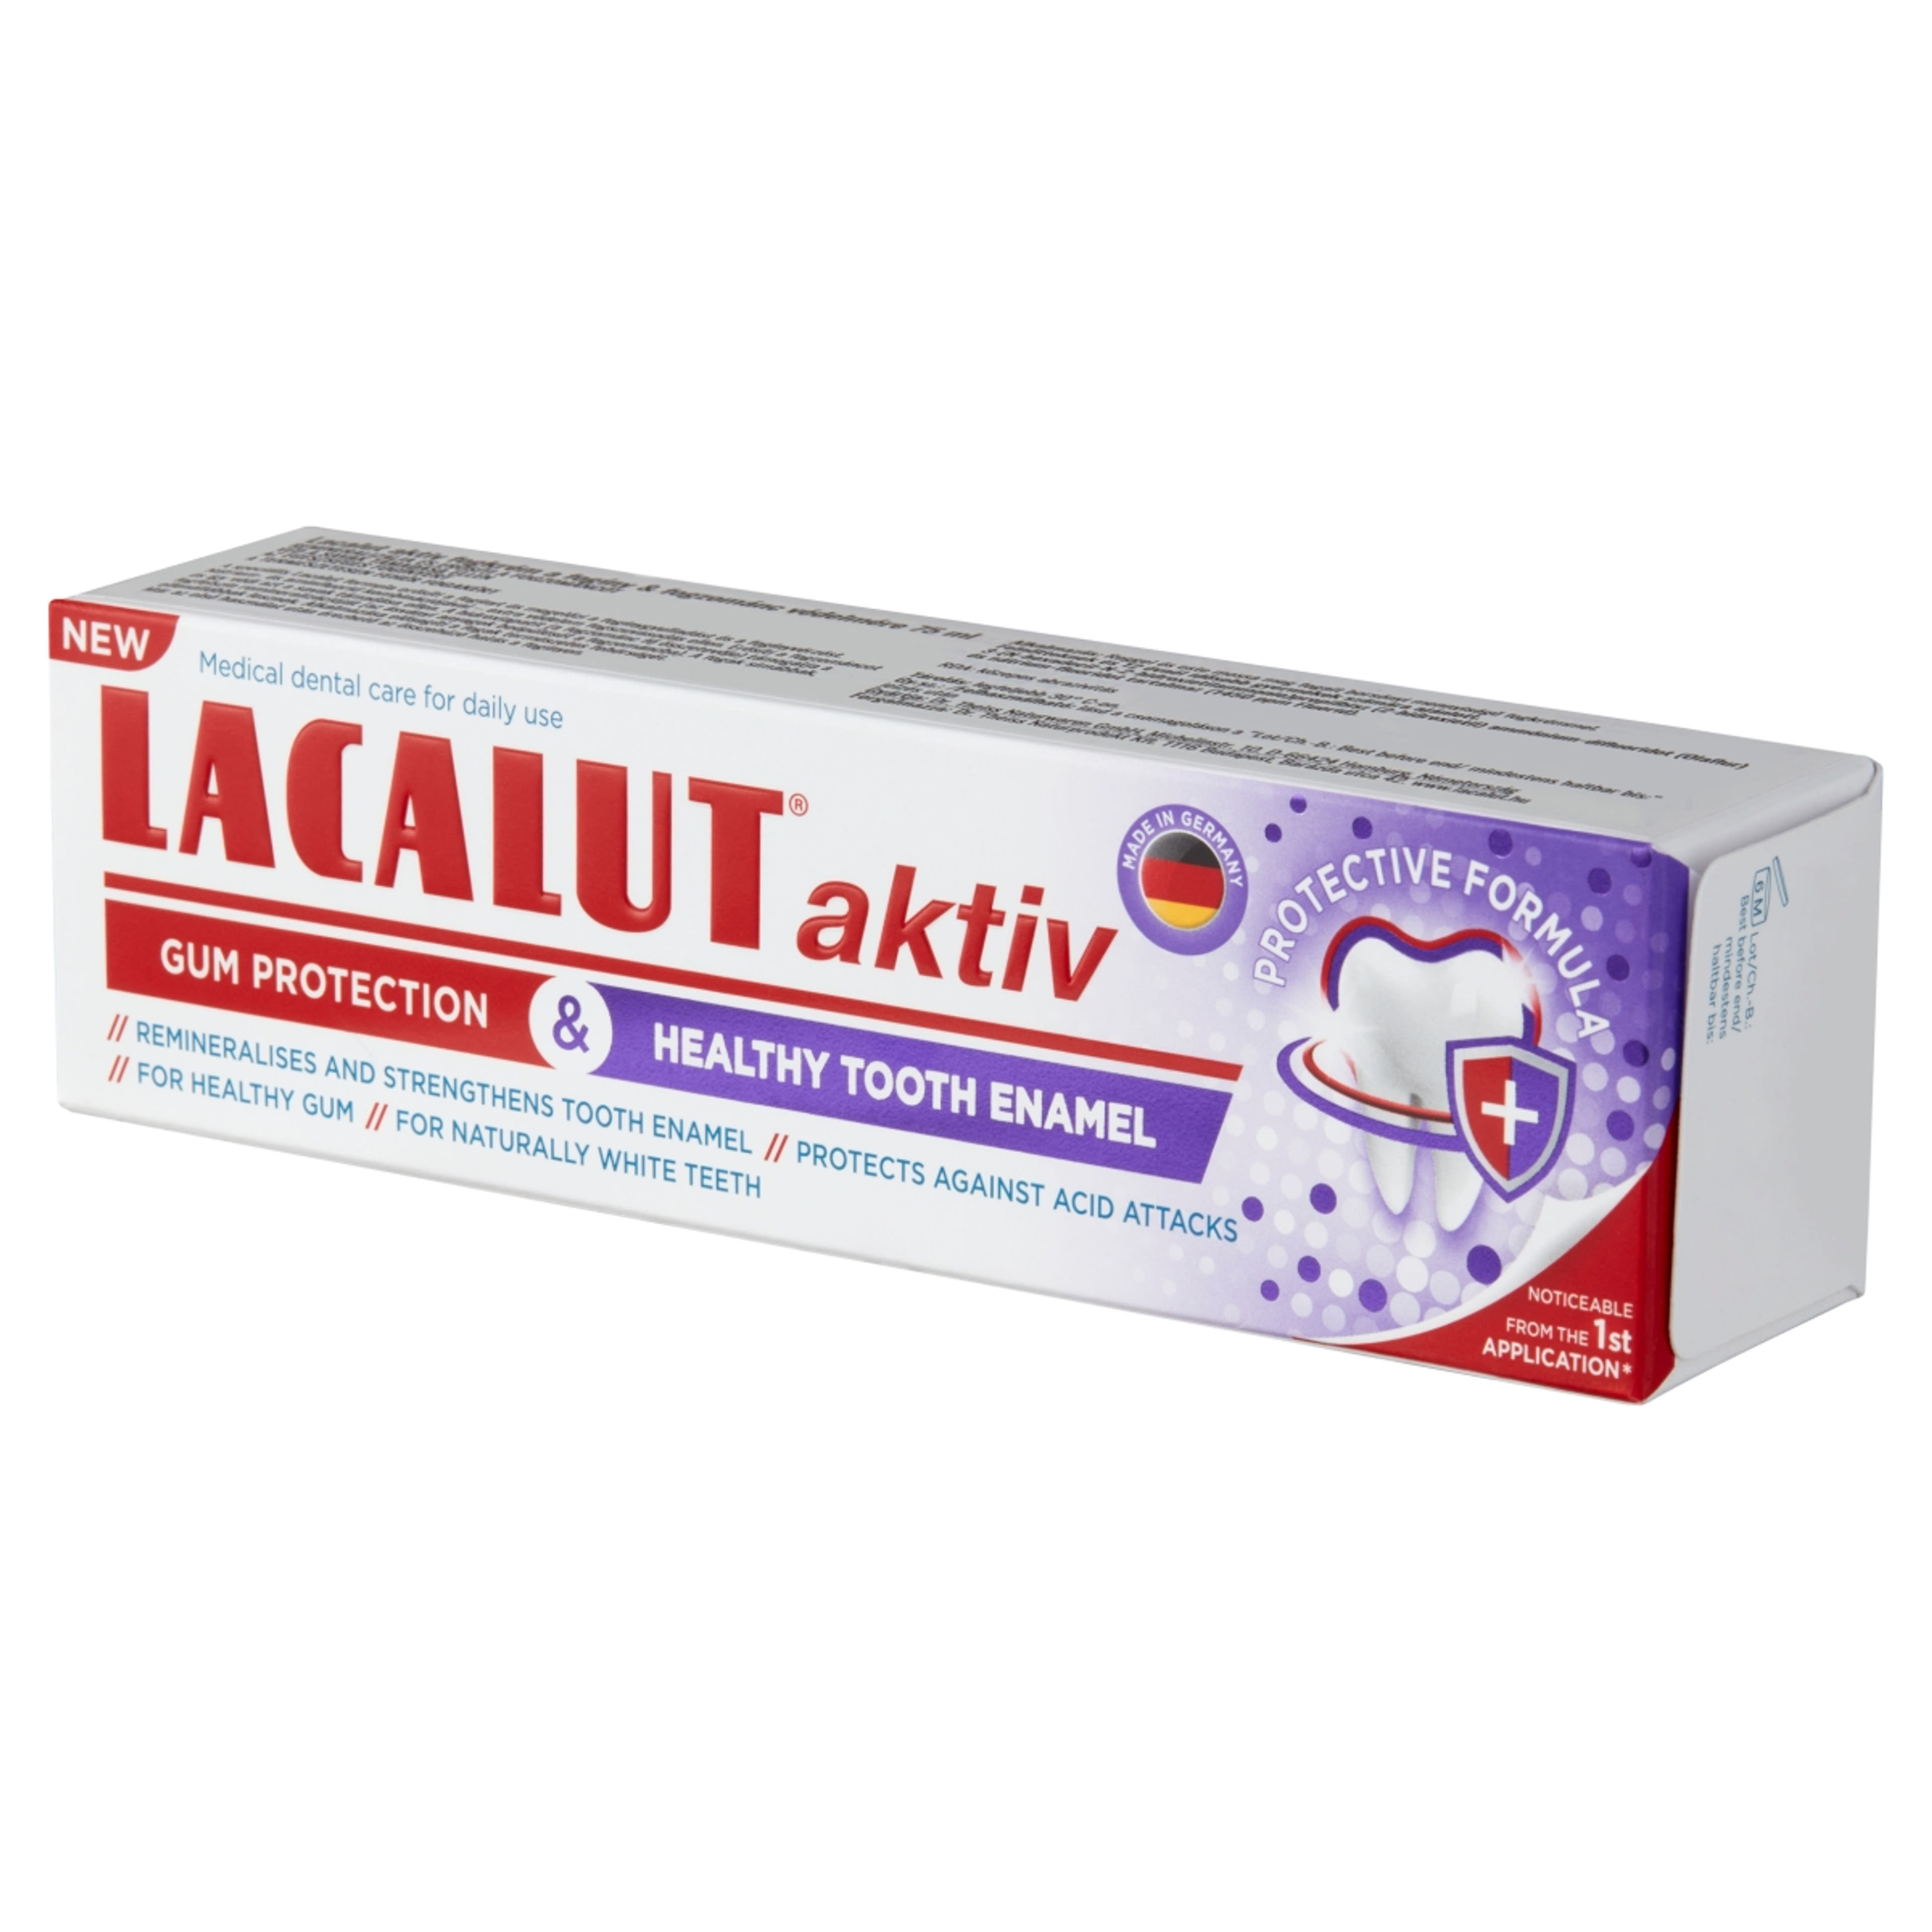 Lacalut Aktív Gum Protection&Healthy Tooth Enamel fogkrém - 75 ml-3